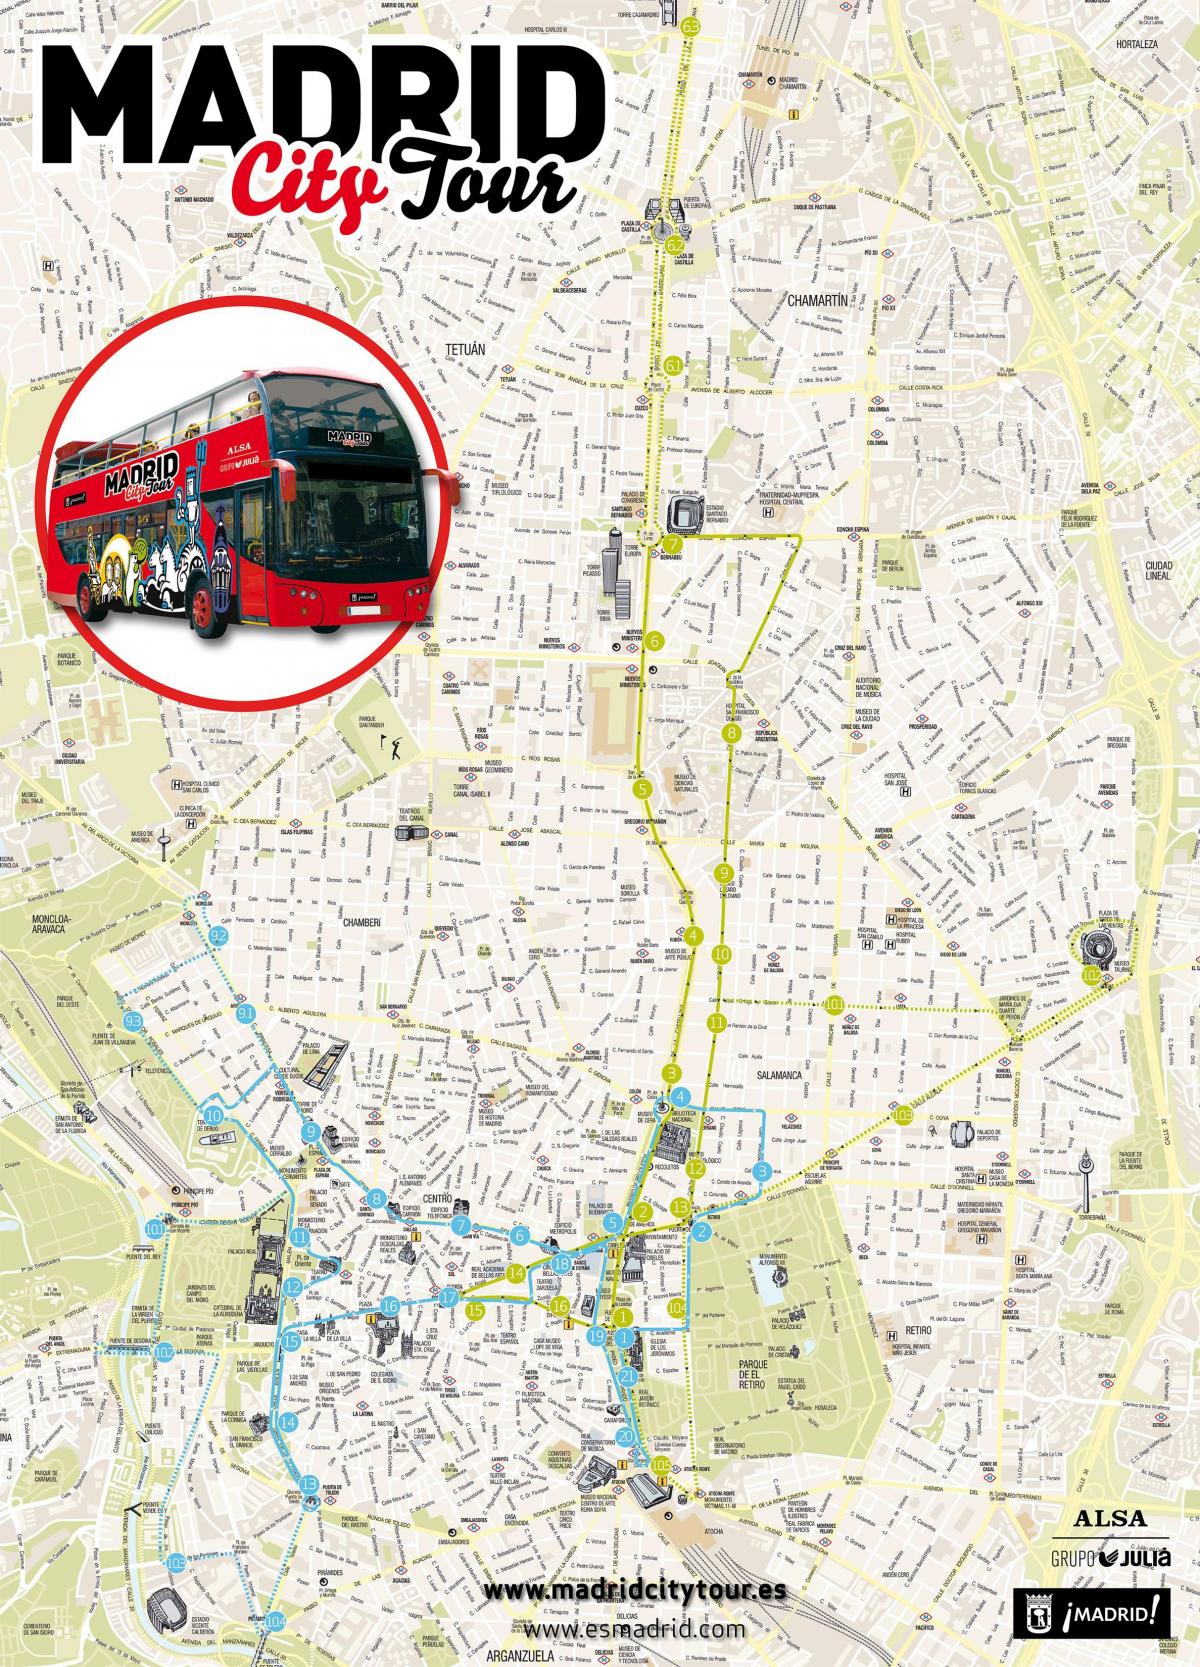 Madrid city bus tour ramani